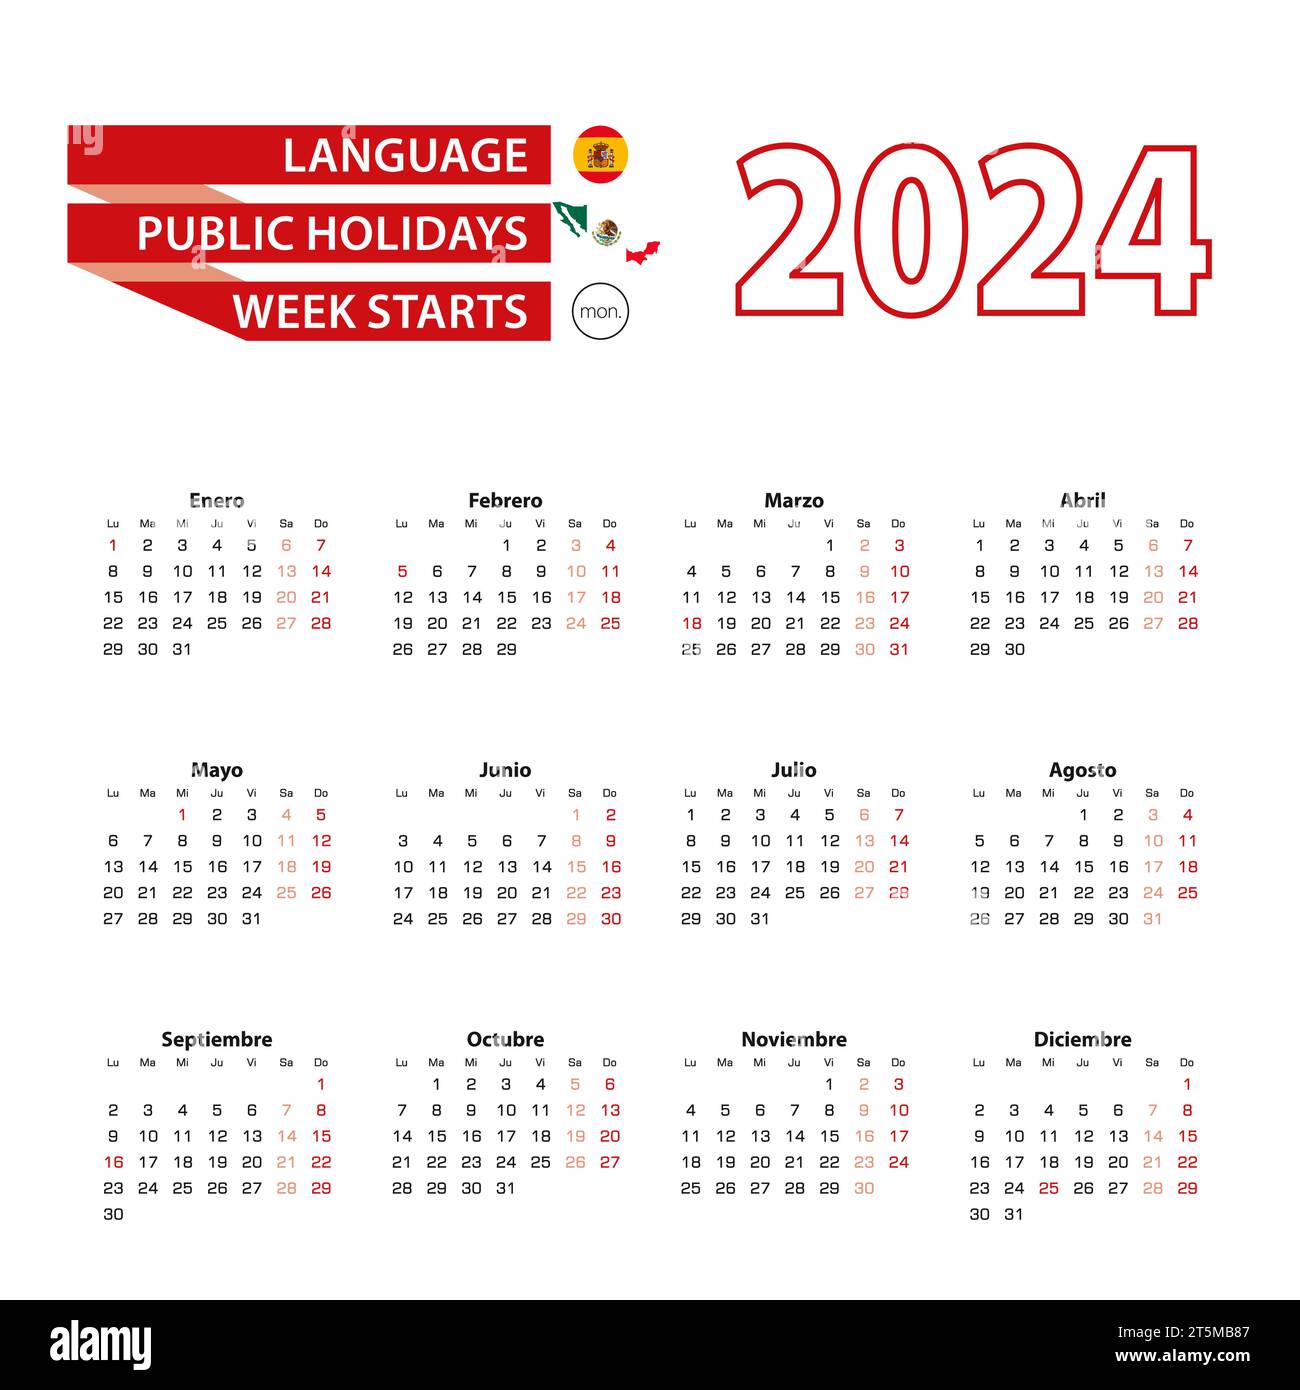 https://c8.alamy.com/compes/2t5mb87/calendario-2024-en-idioma-espanol-con-dias-festivos-del-pais-de-mexico-en-el-ano-2024-la-semana-comienza-a-partir-del-lunes-ilustracion-vectorial-2t5mb87.jpg